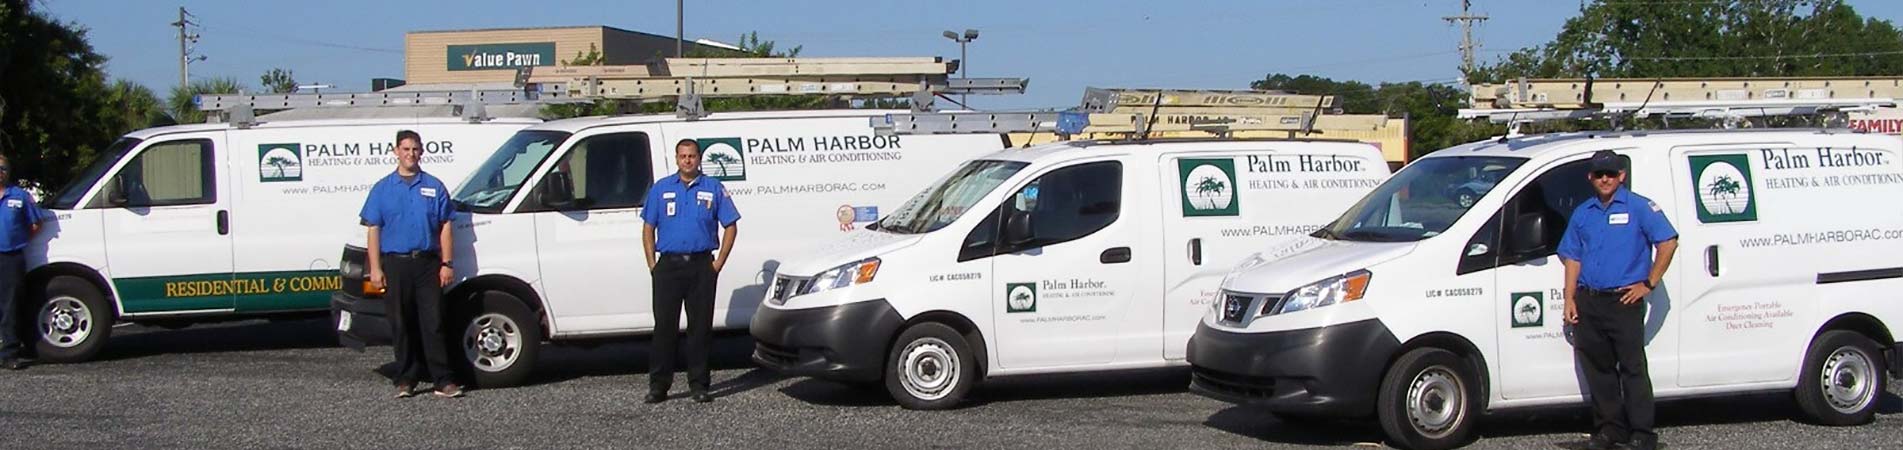 Palm Harbor Heating & AC